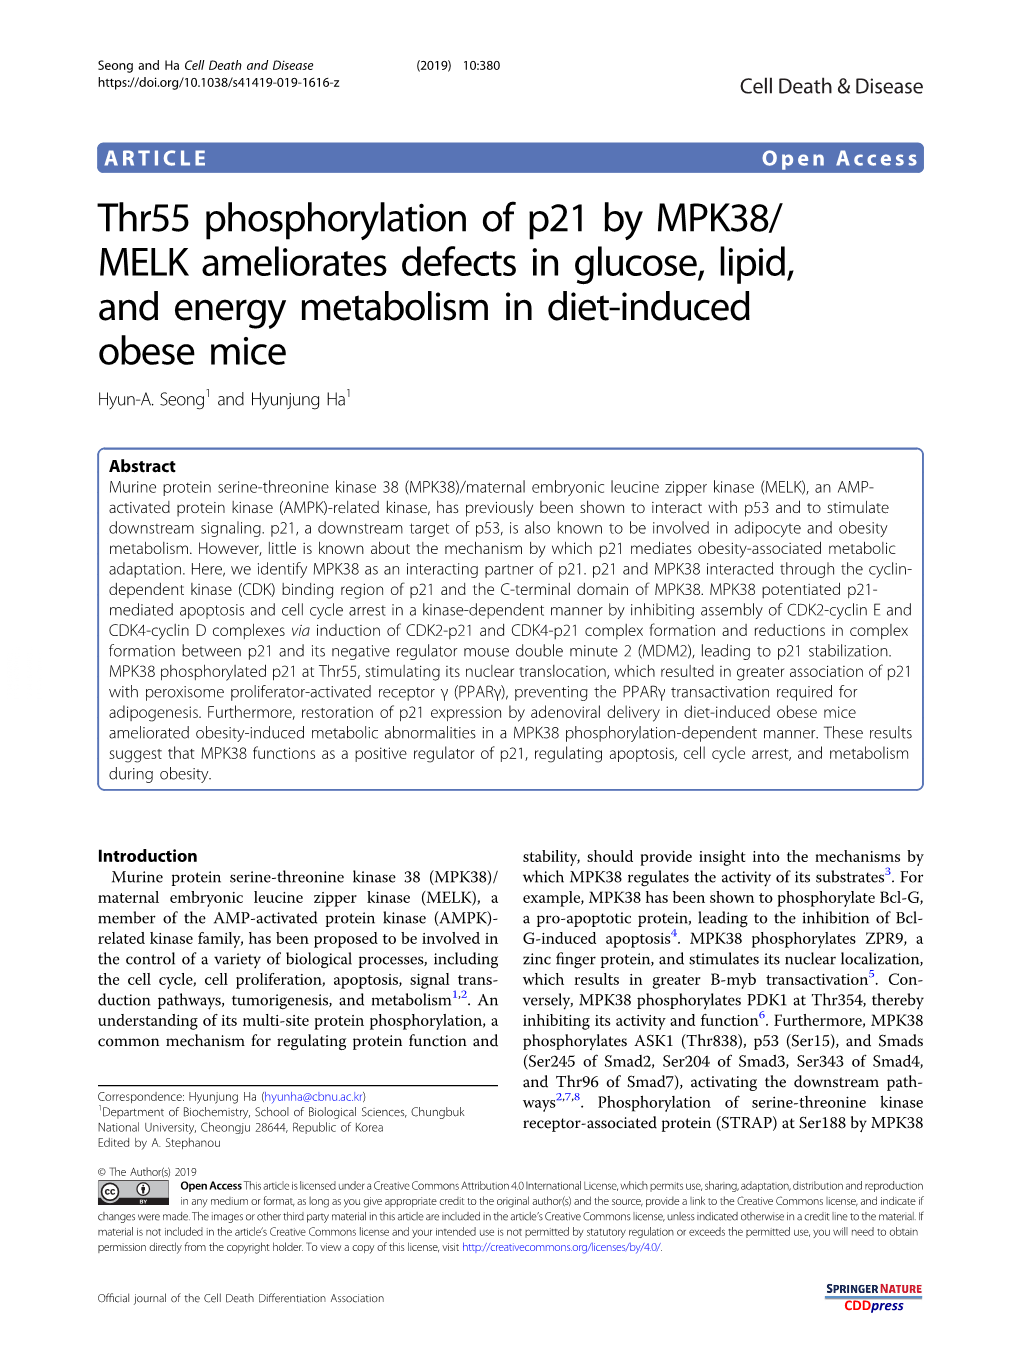 Thr55 Phosphorylation of P21 by MPK38/MELK Ameliorates Defects